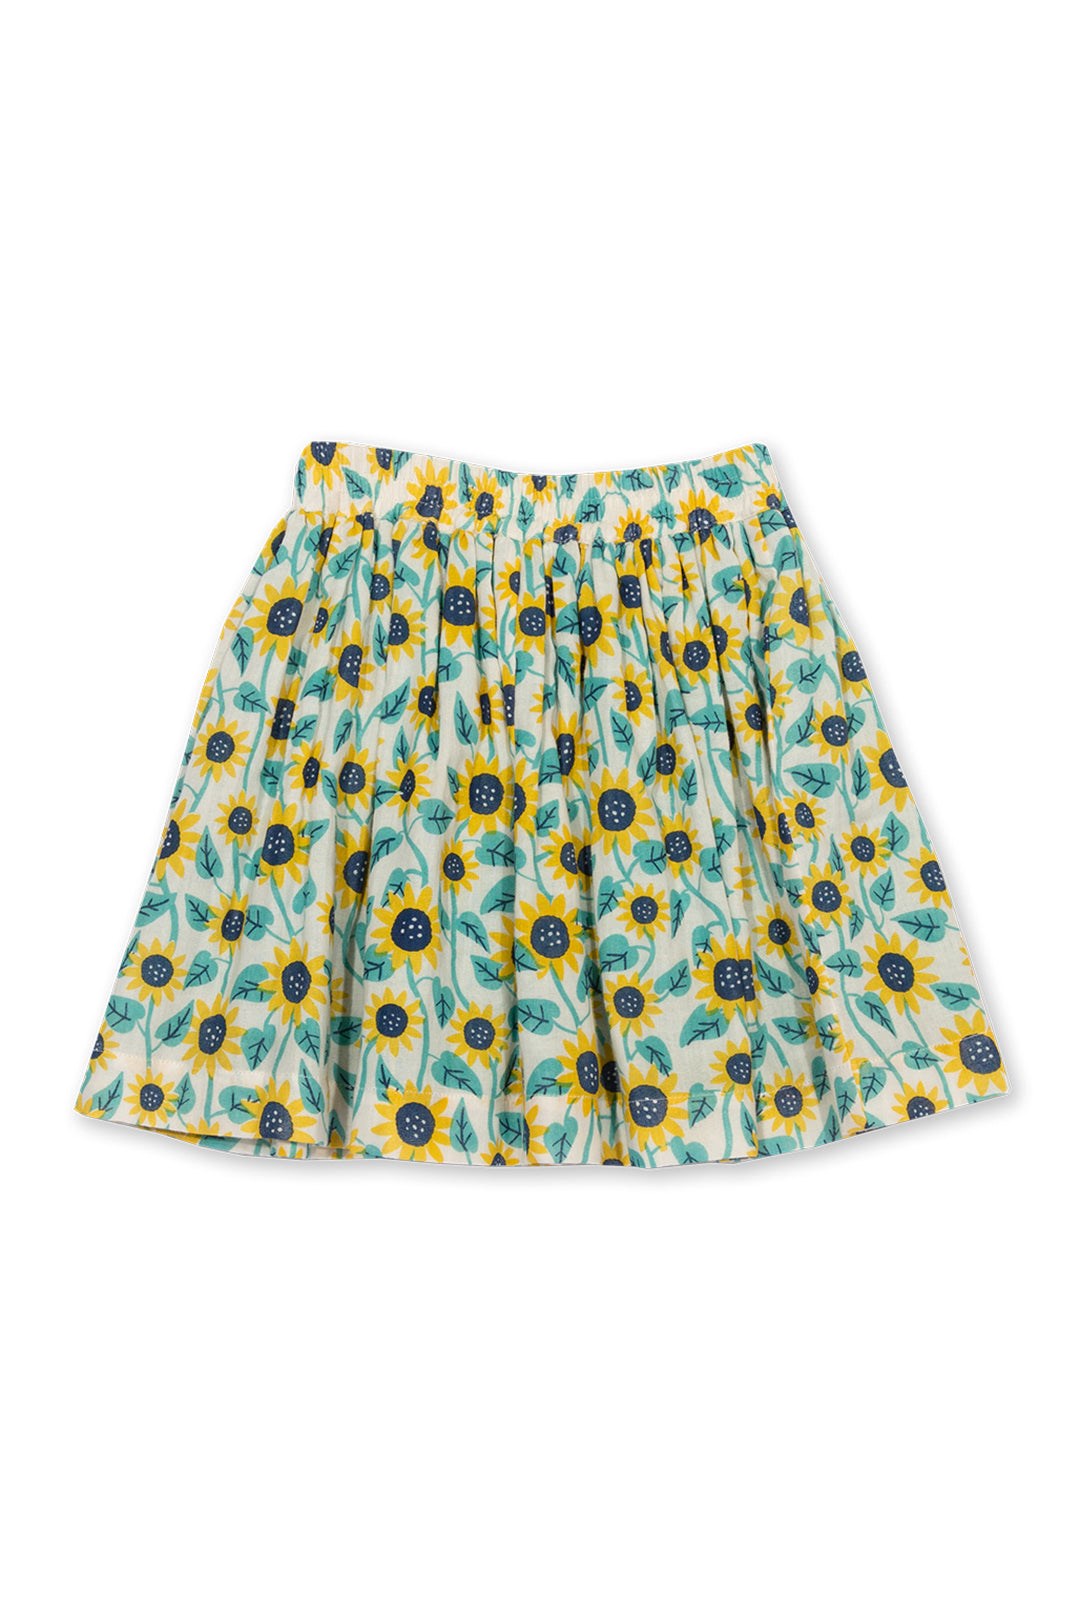 Sunflower Kids Organic Cotton Skirt -